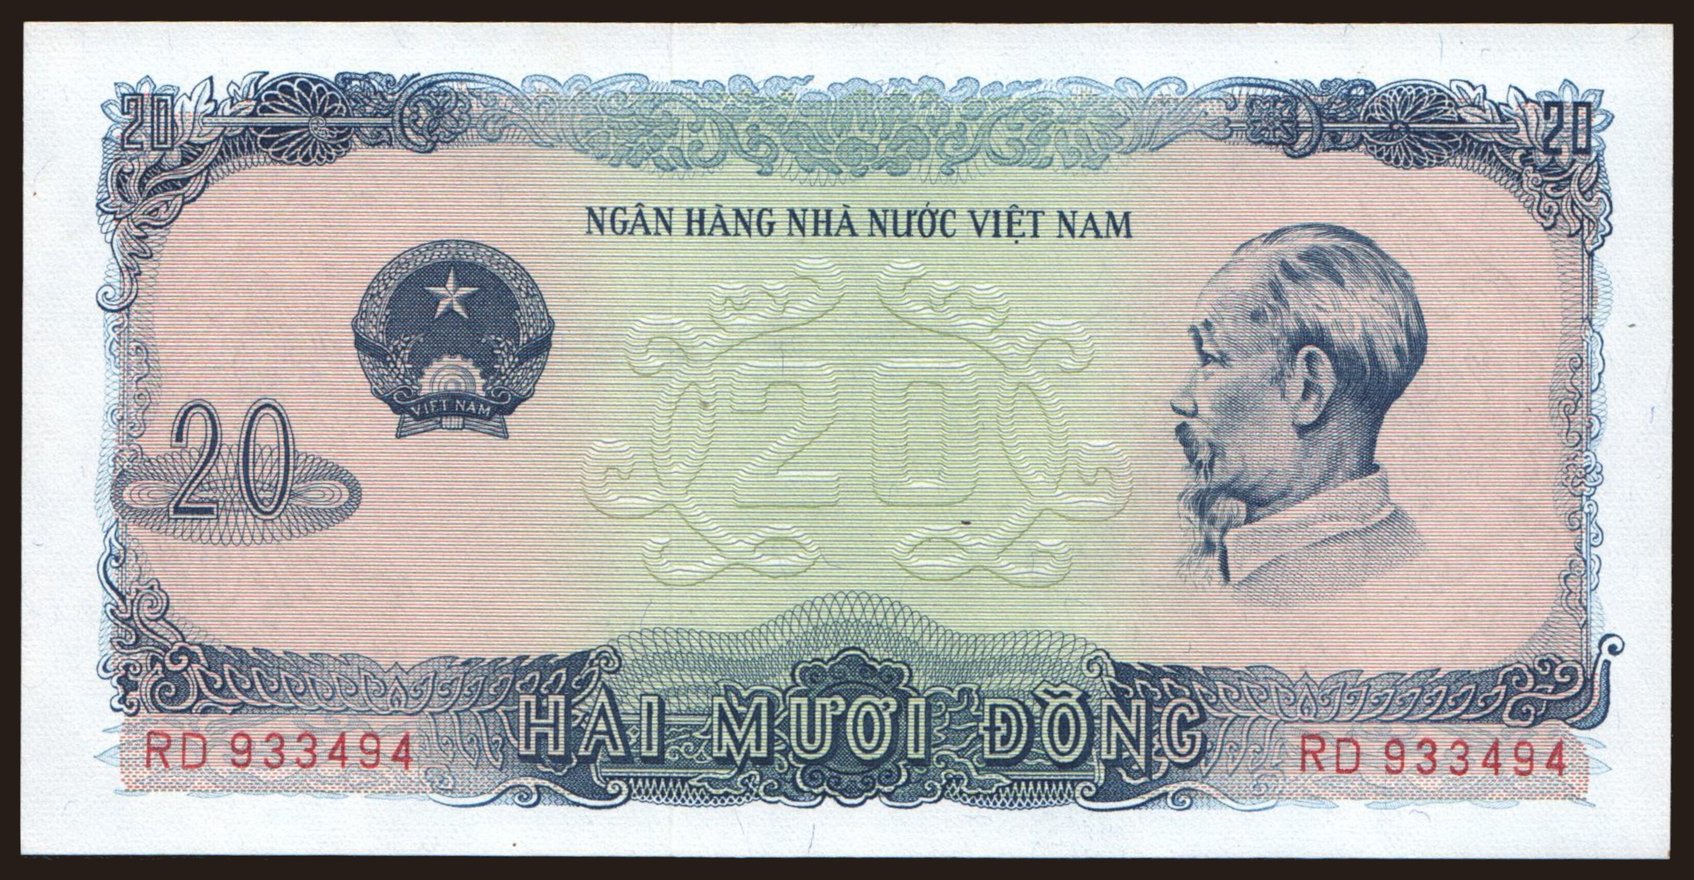 20 dong, 1976